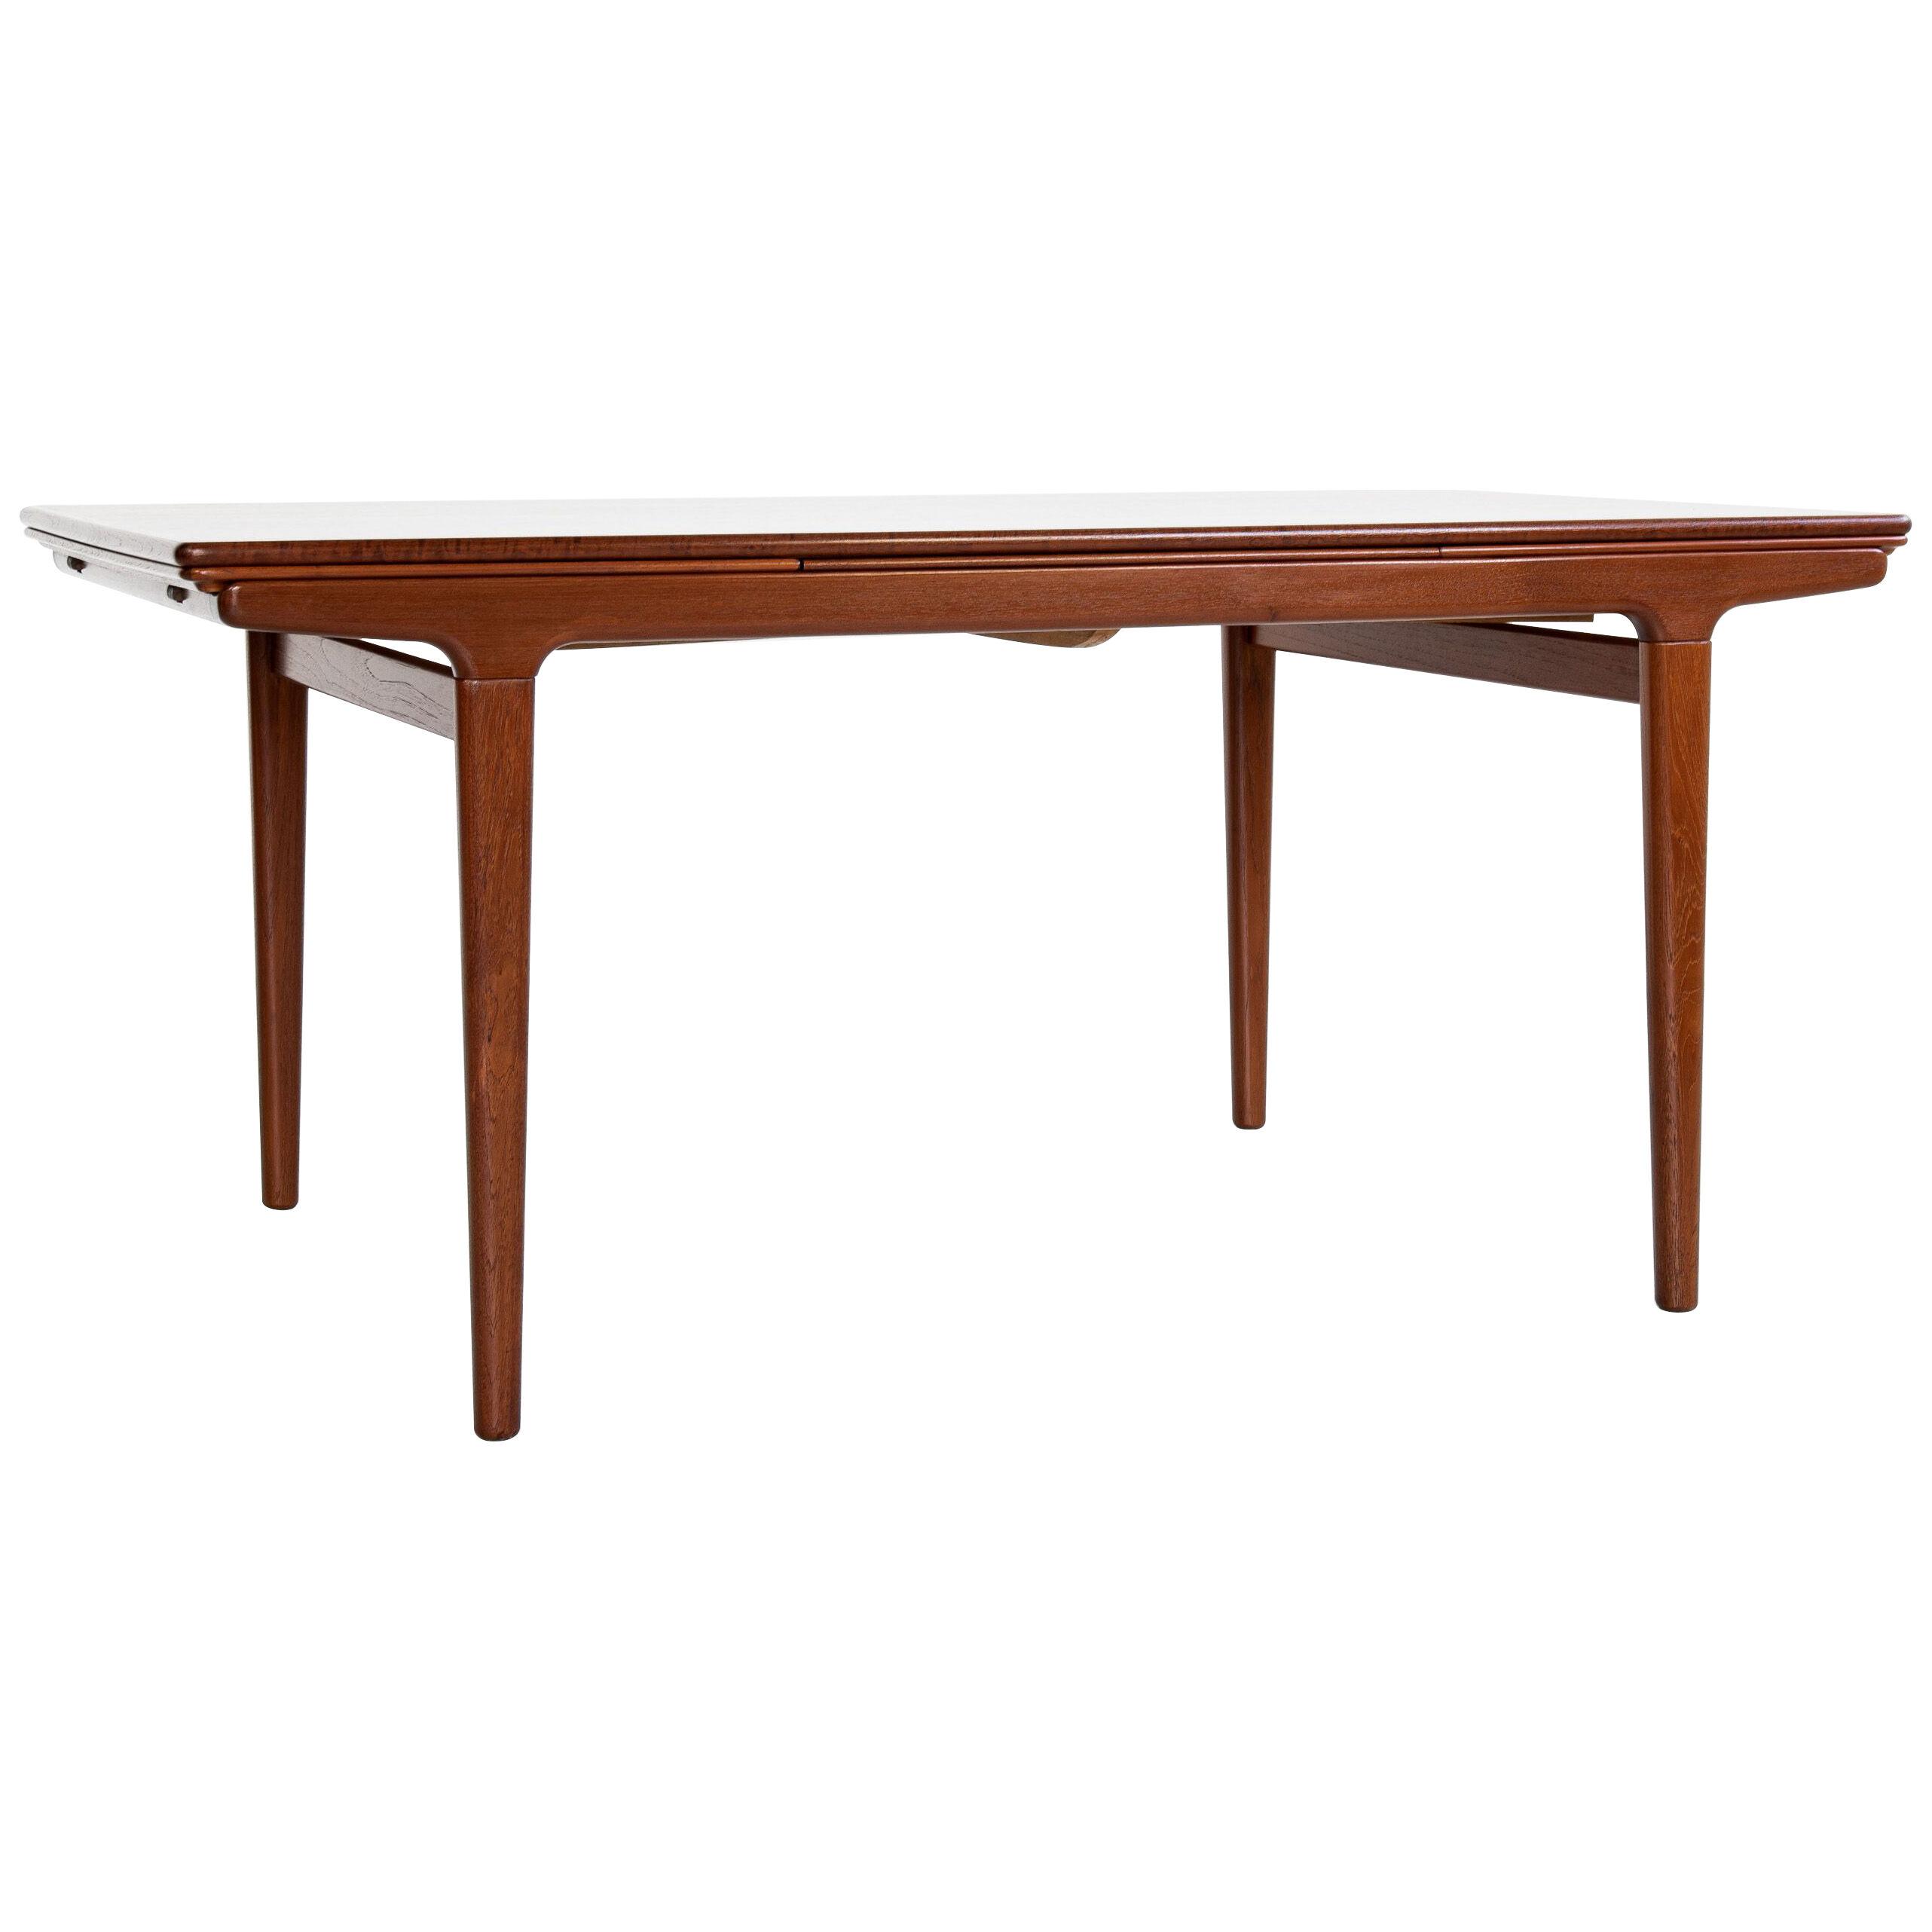 Midcentury Danish extendable dining table in teak by Johannes Andersen 1960s